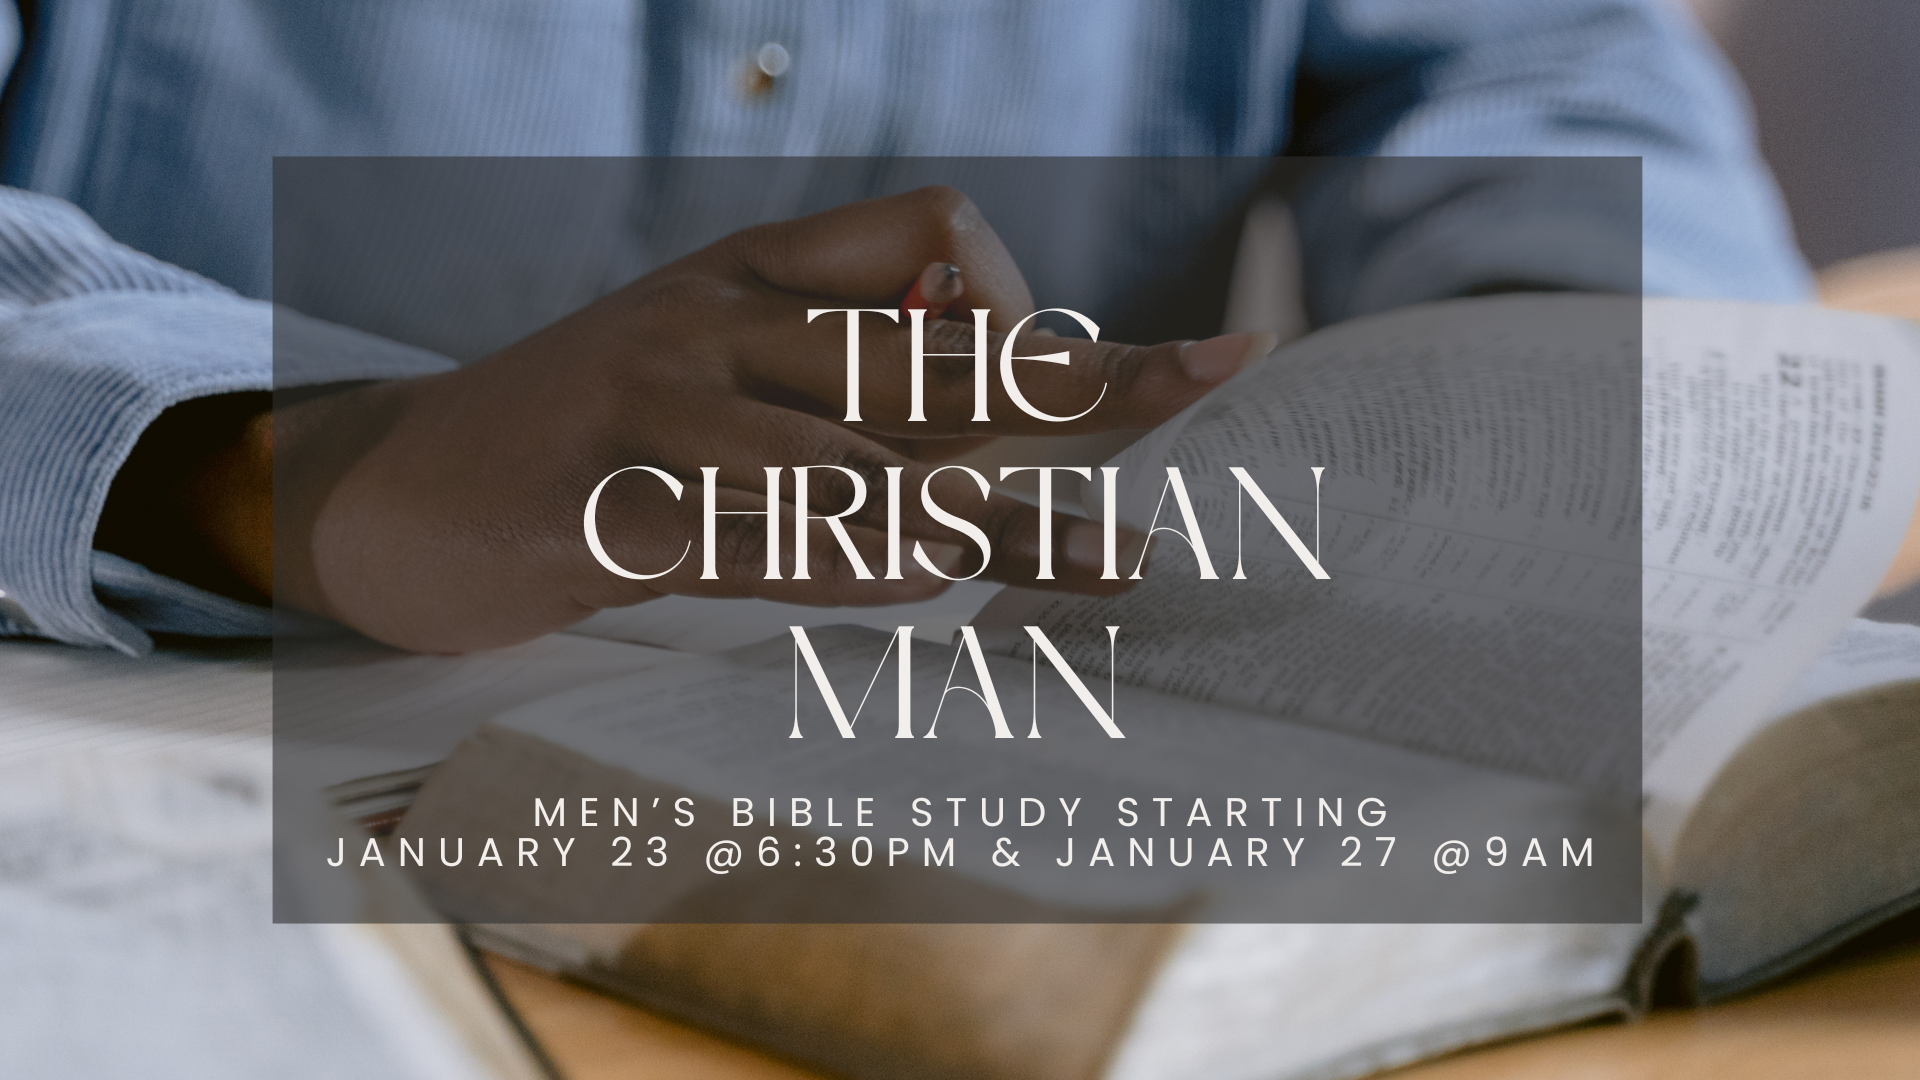 The Christian Man image